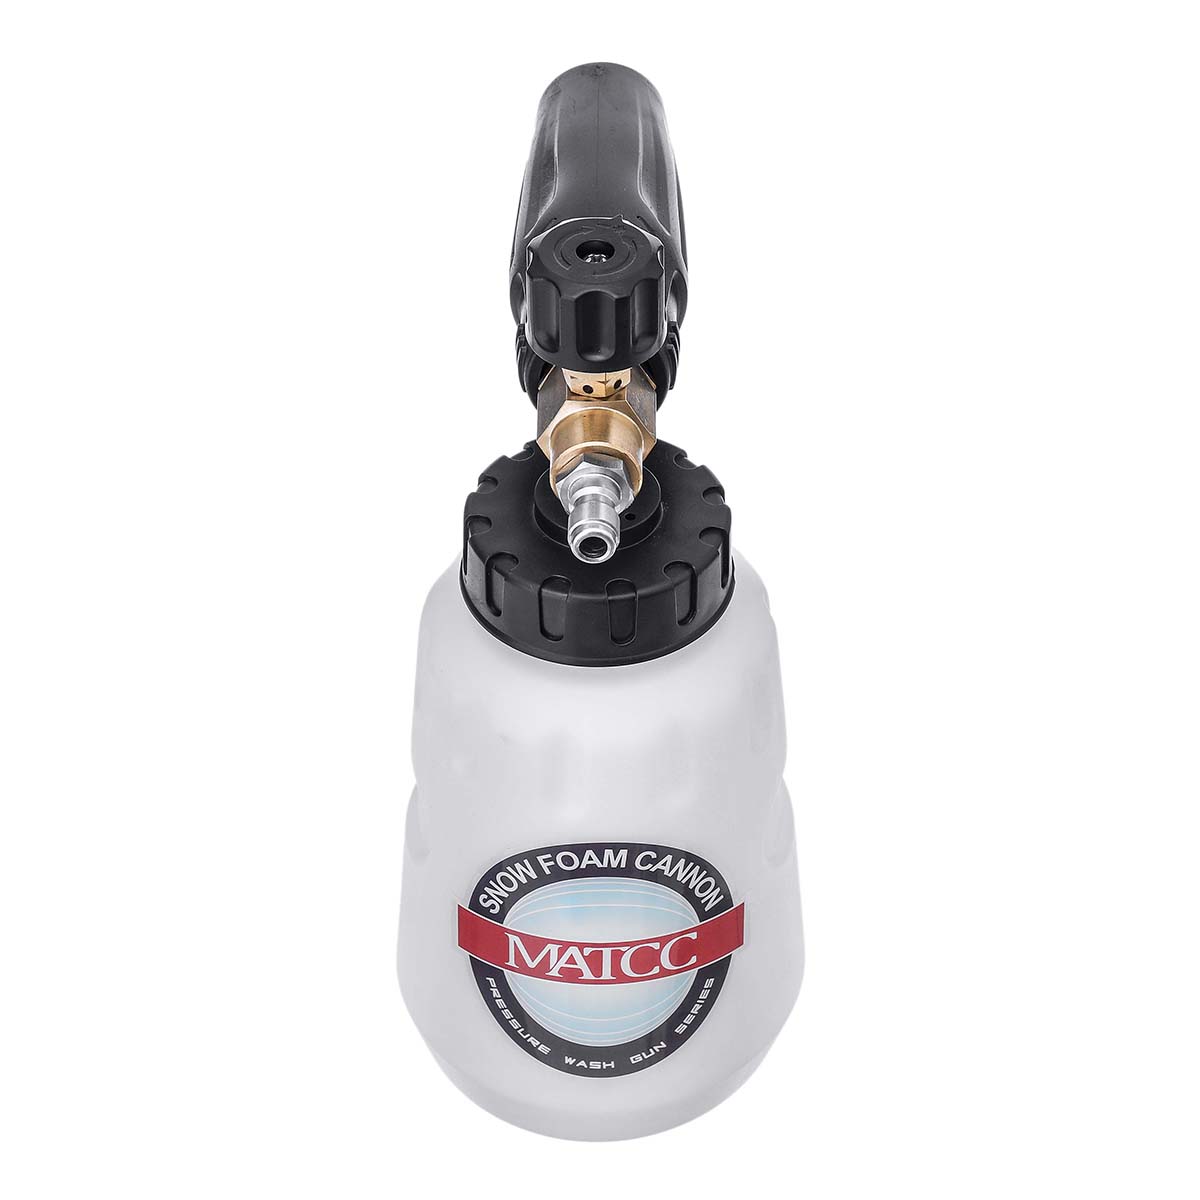 MATCC Upgrade Adjustable Foam Lance Large Bottle Mouth Pressure Washer Jet Wash with 1/4'' Quick Connector